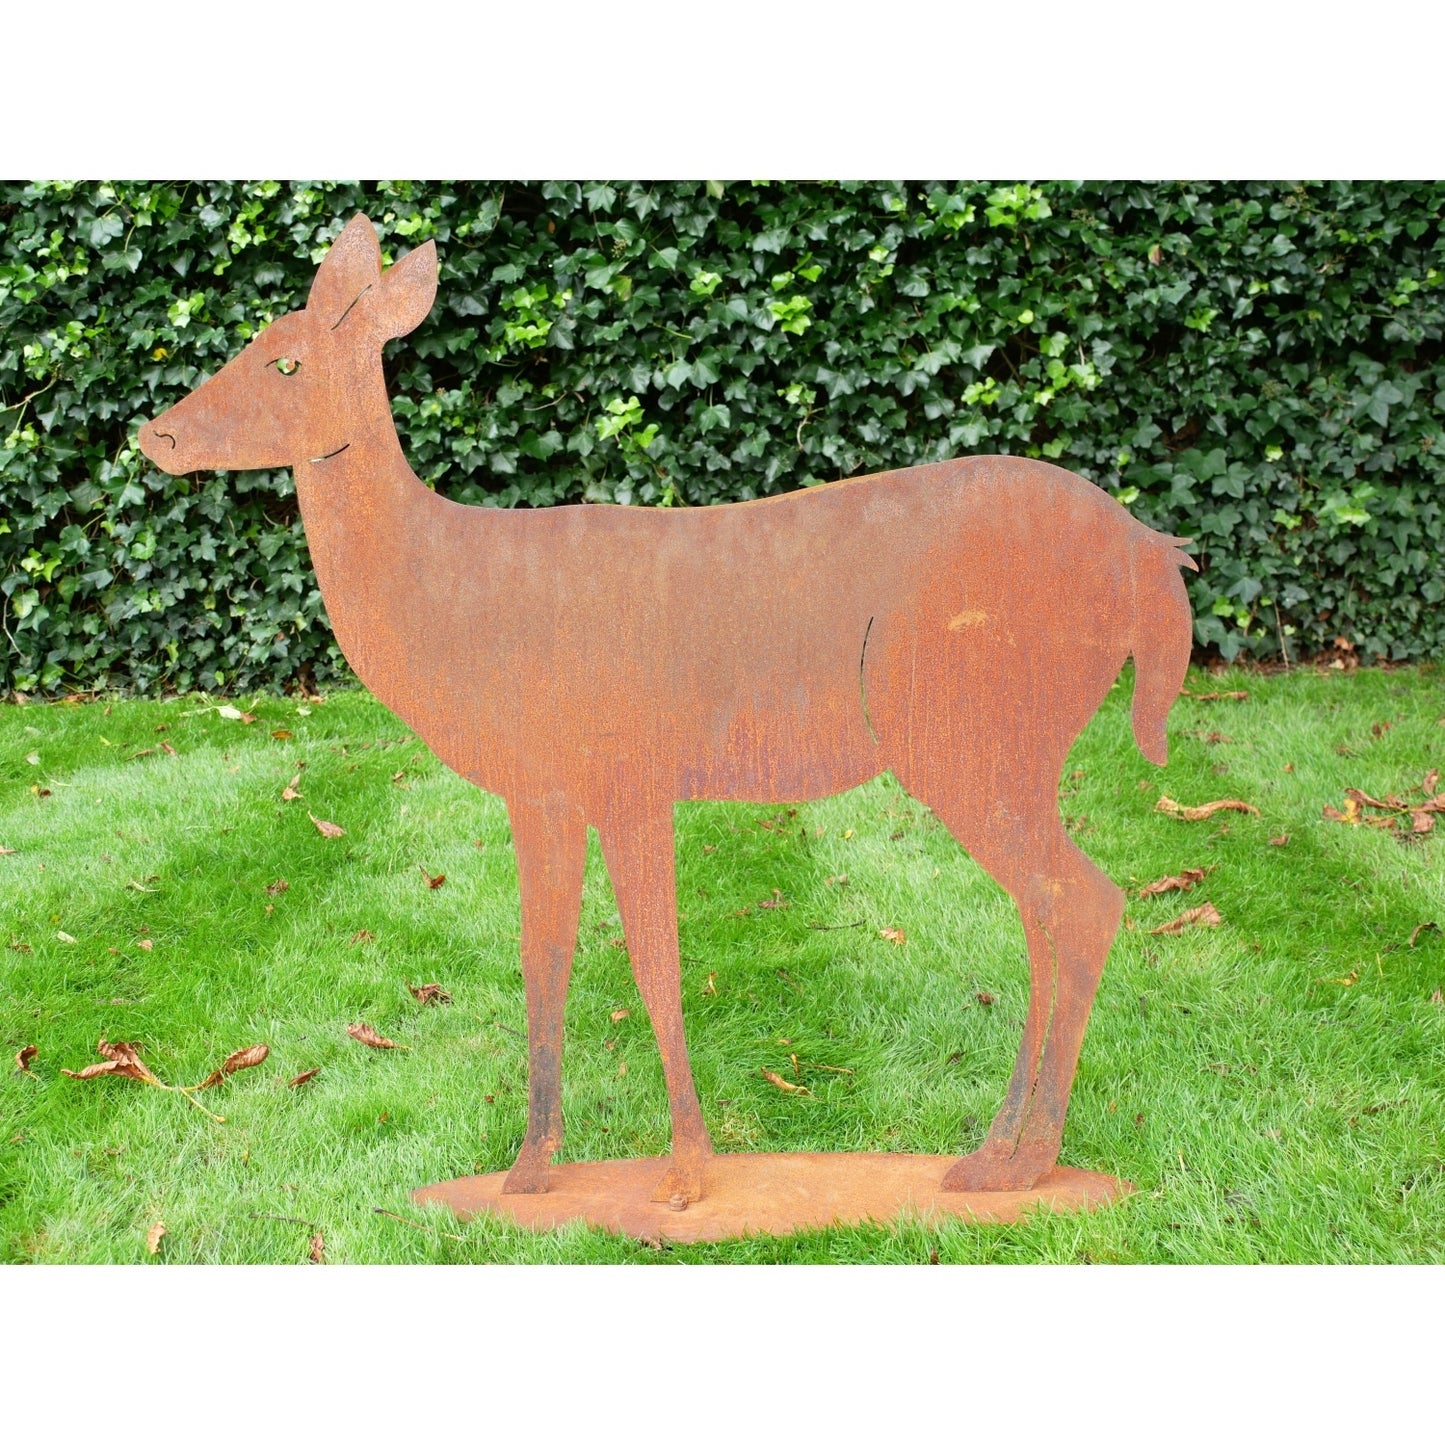 Rusty Deer Stag Silhouette Freestanding Garden Animal Figure Metal 3'3"H 5'4" W